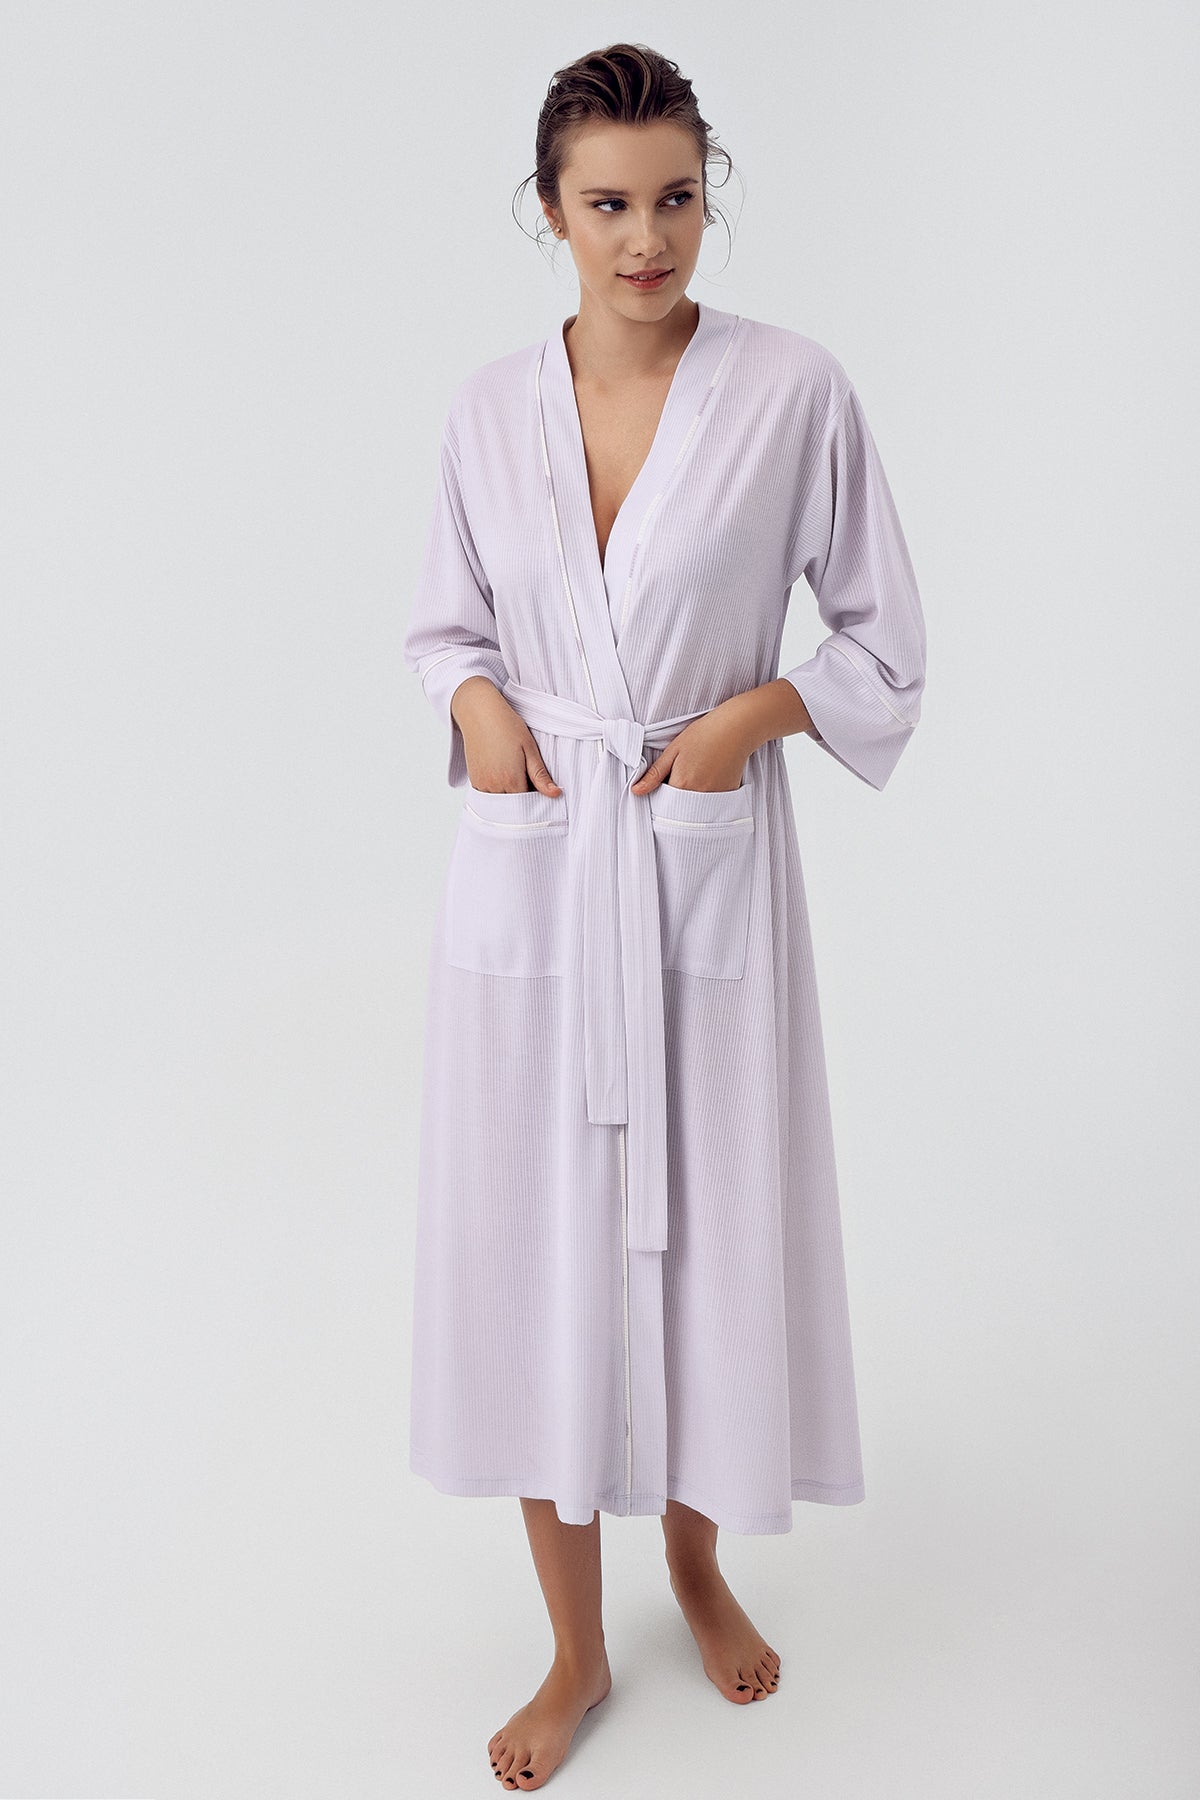 Shopymommy 16501 Striped Maternity Robe Lilac